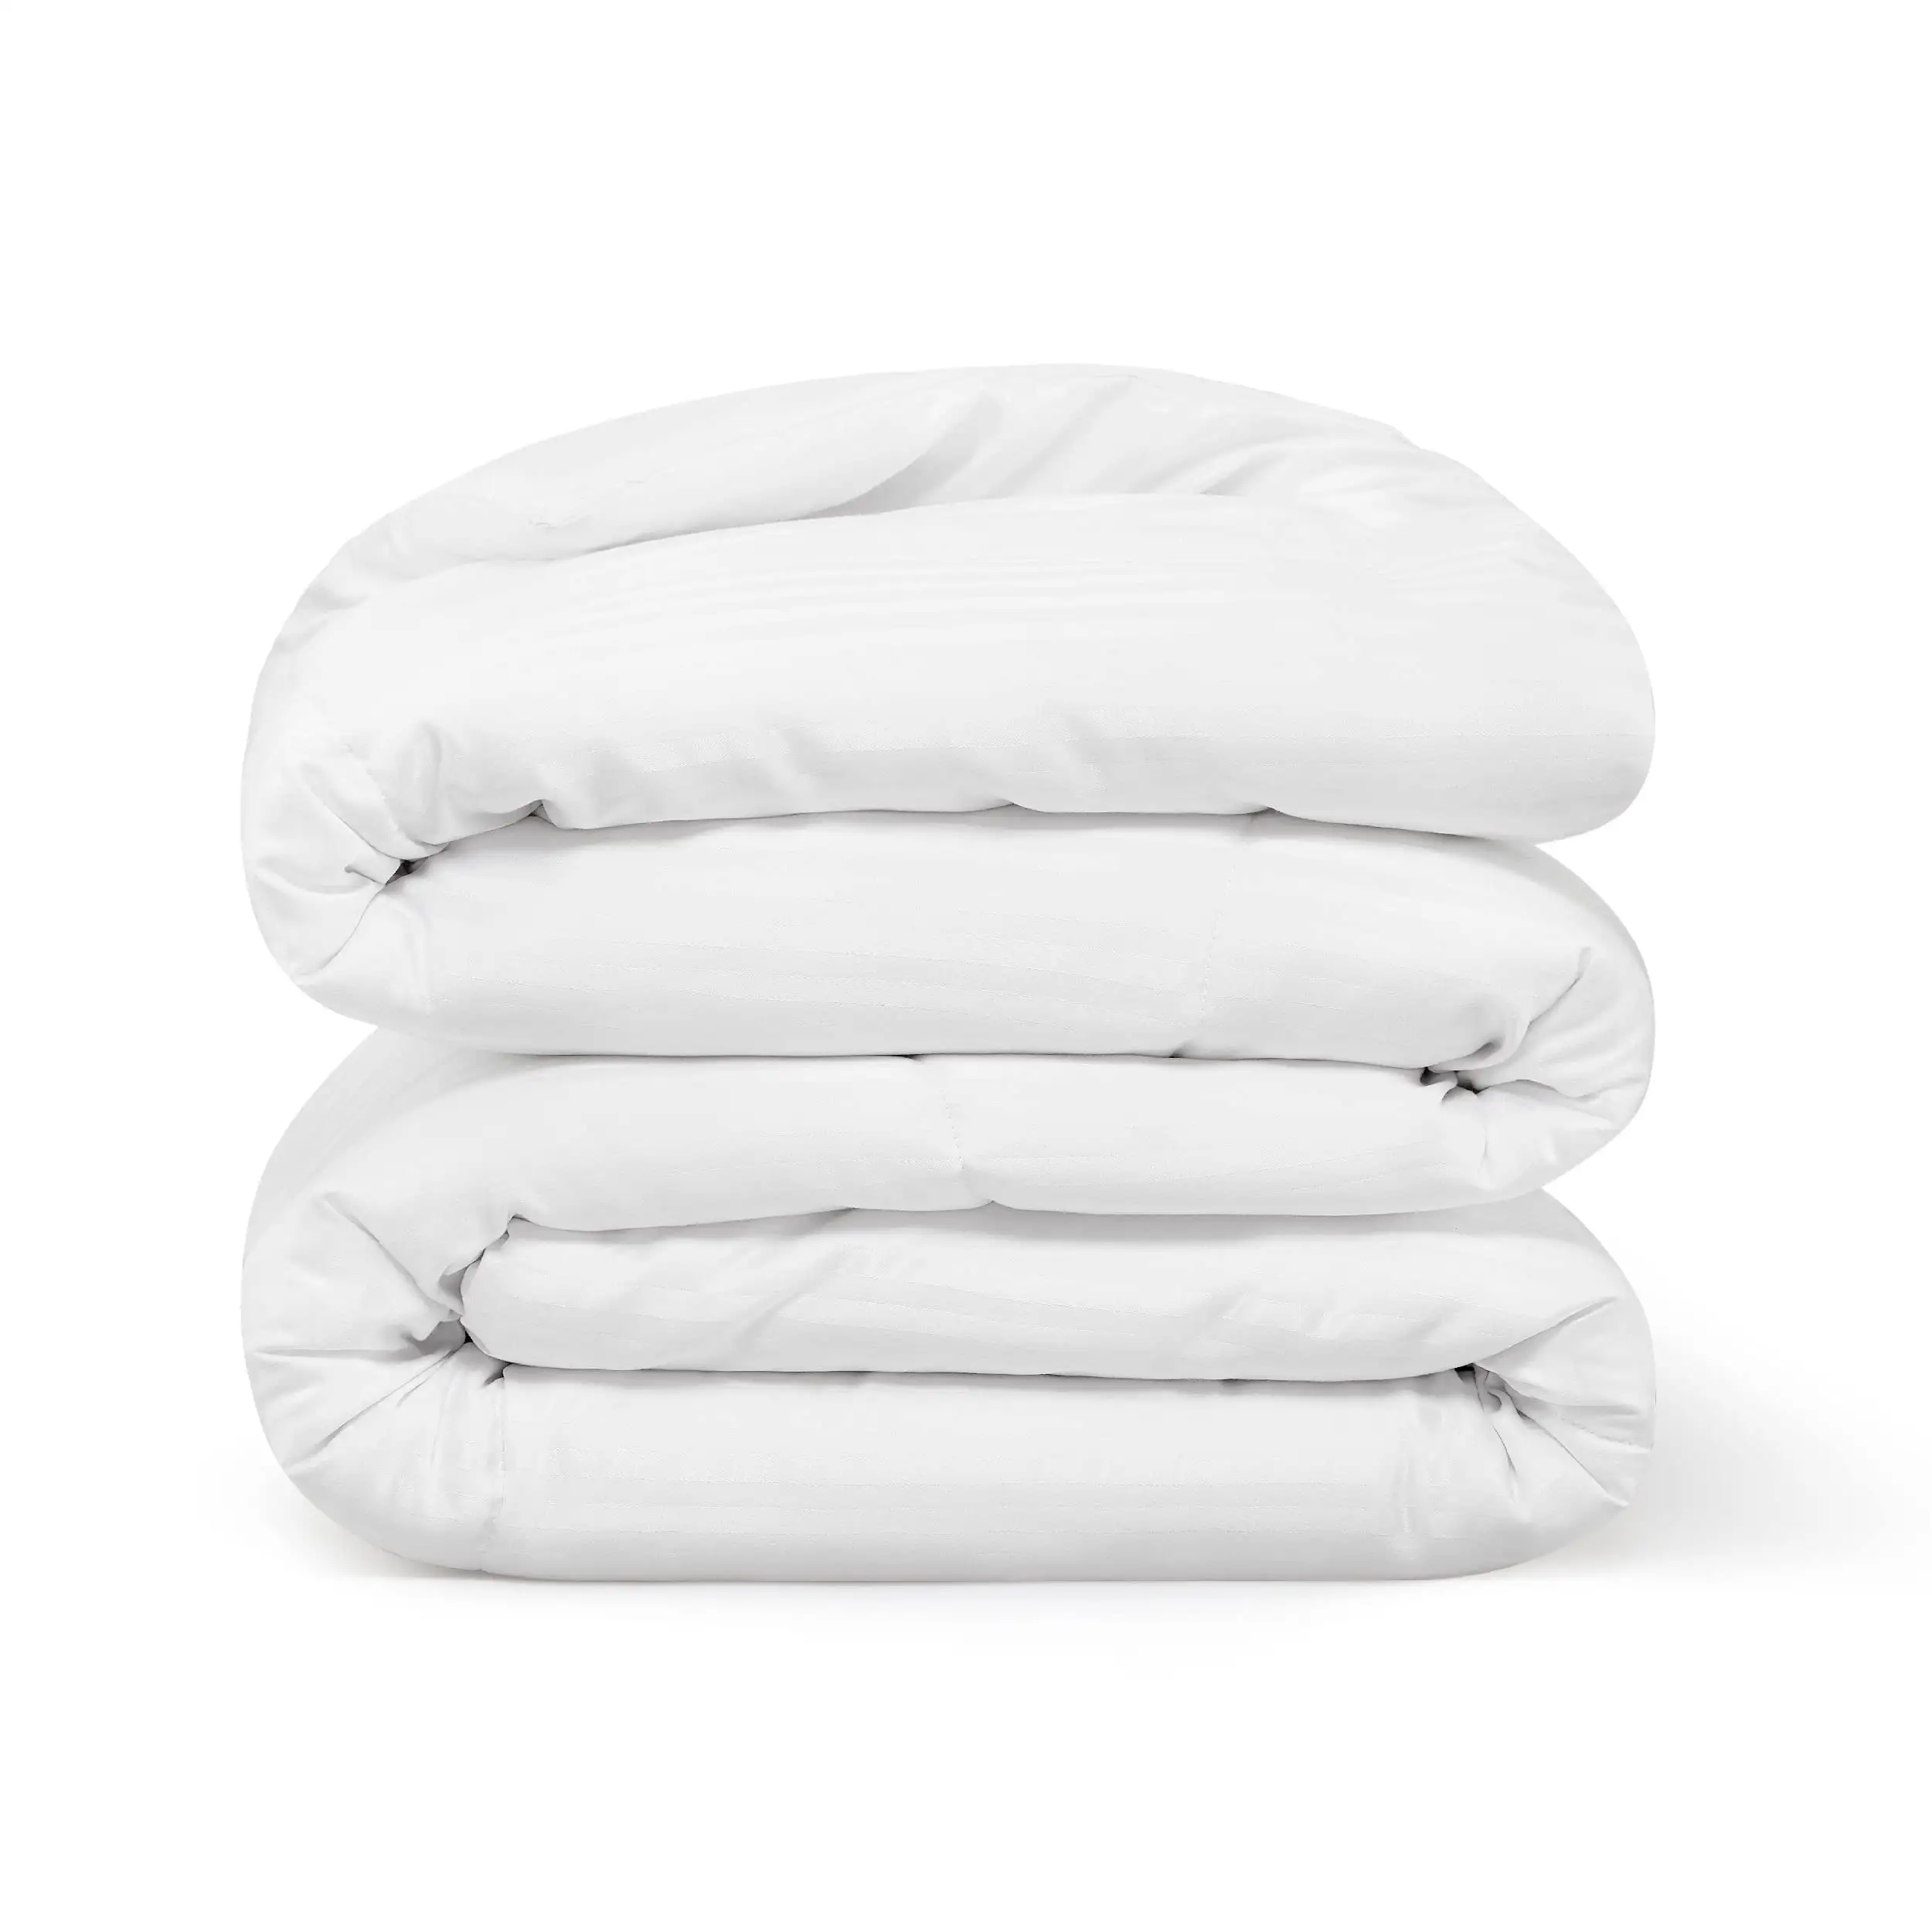 customized duvet insert cooling comforters lightweight duvet Insert quilted bedding hotel down alternative comforter